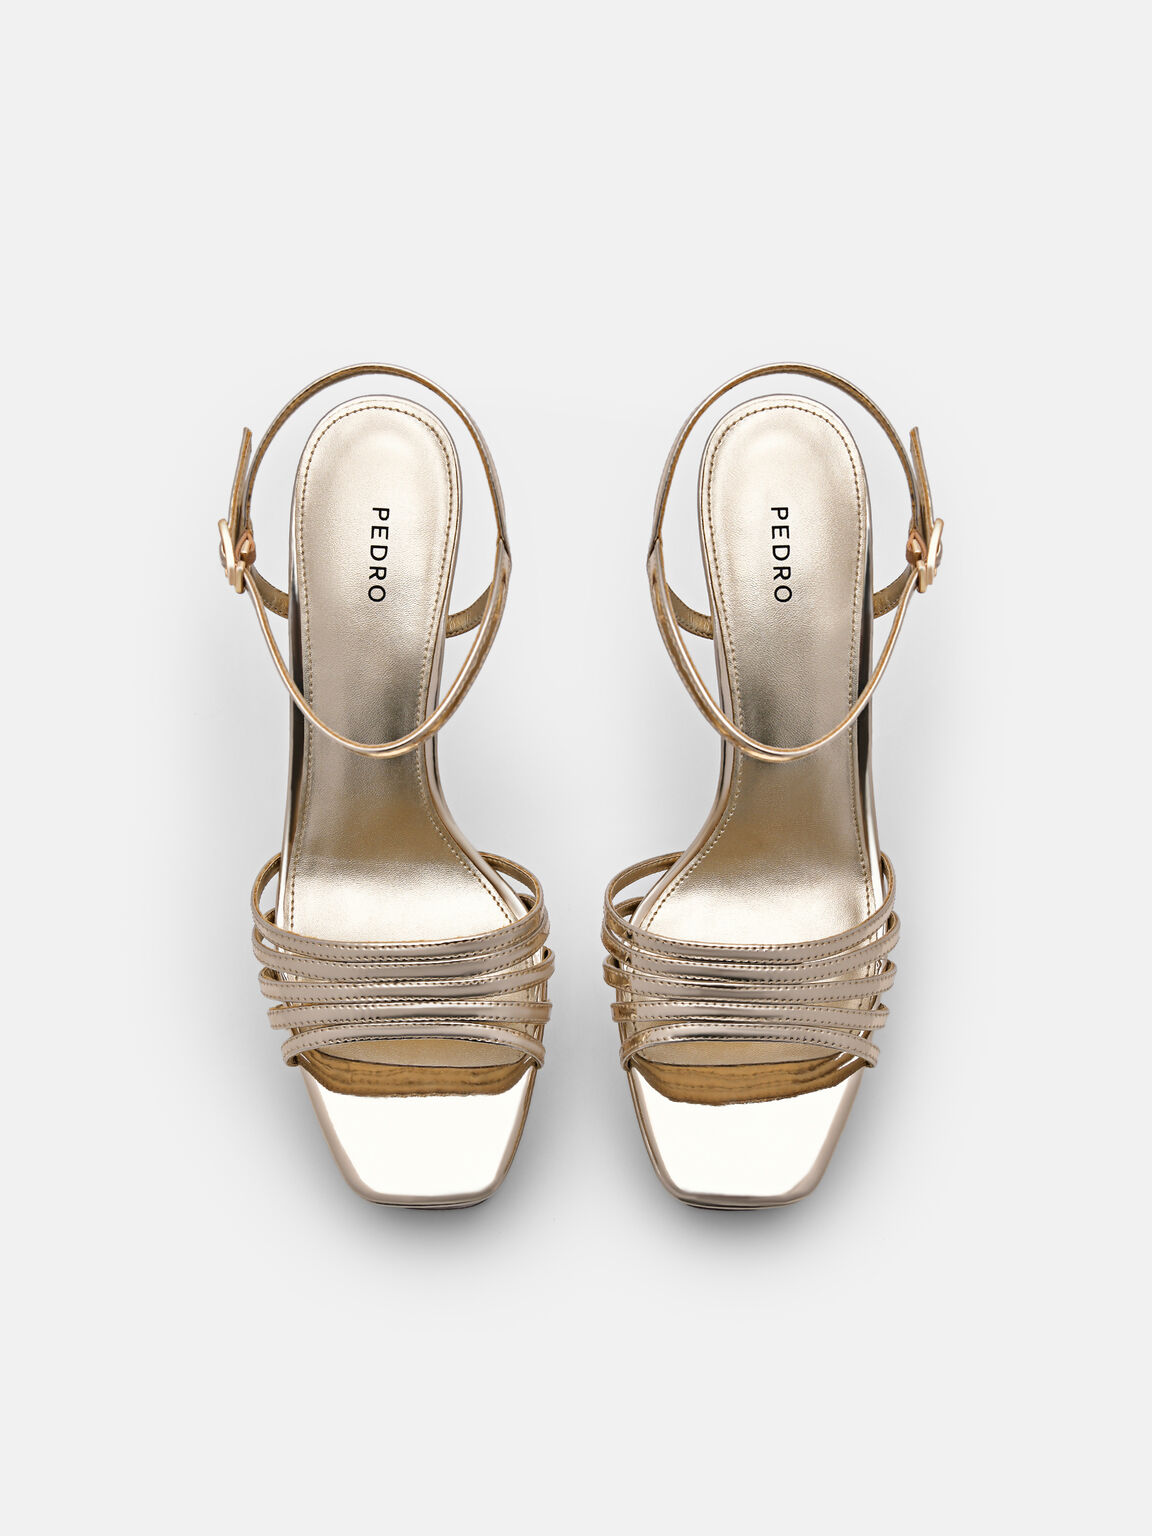 Giày sandals cao gót Iza Platform, Vàng Đồng, hi-res